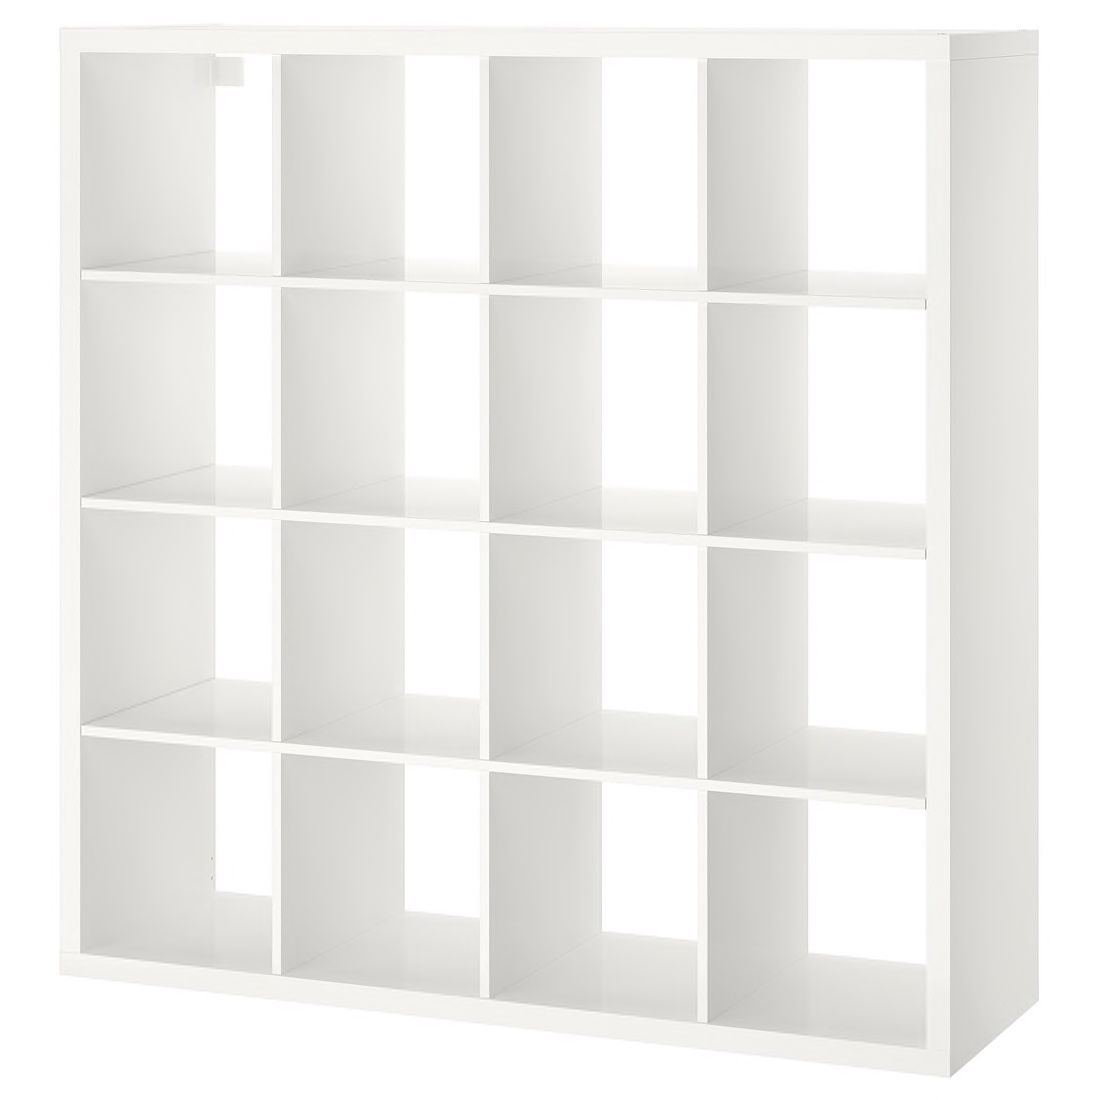 Ikea white storage shelf / shelves bookcase